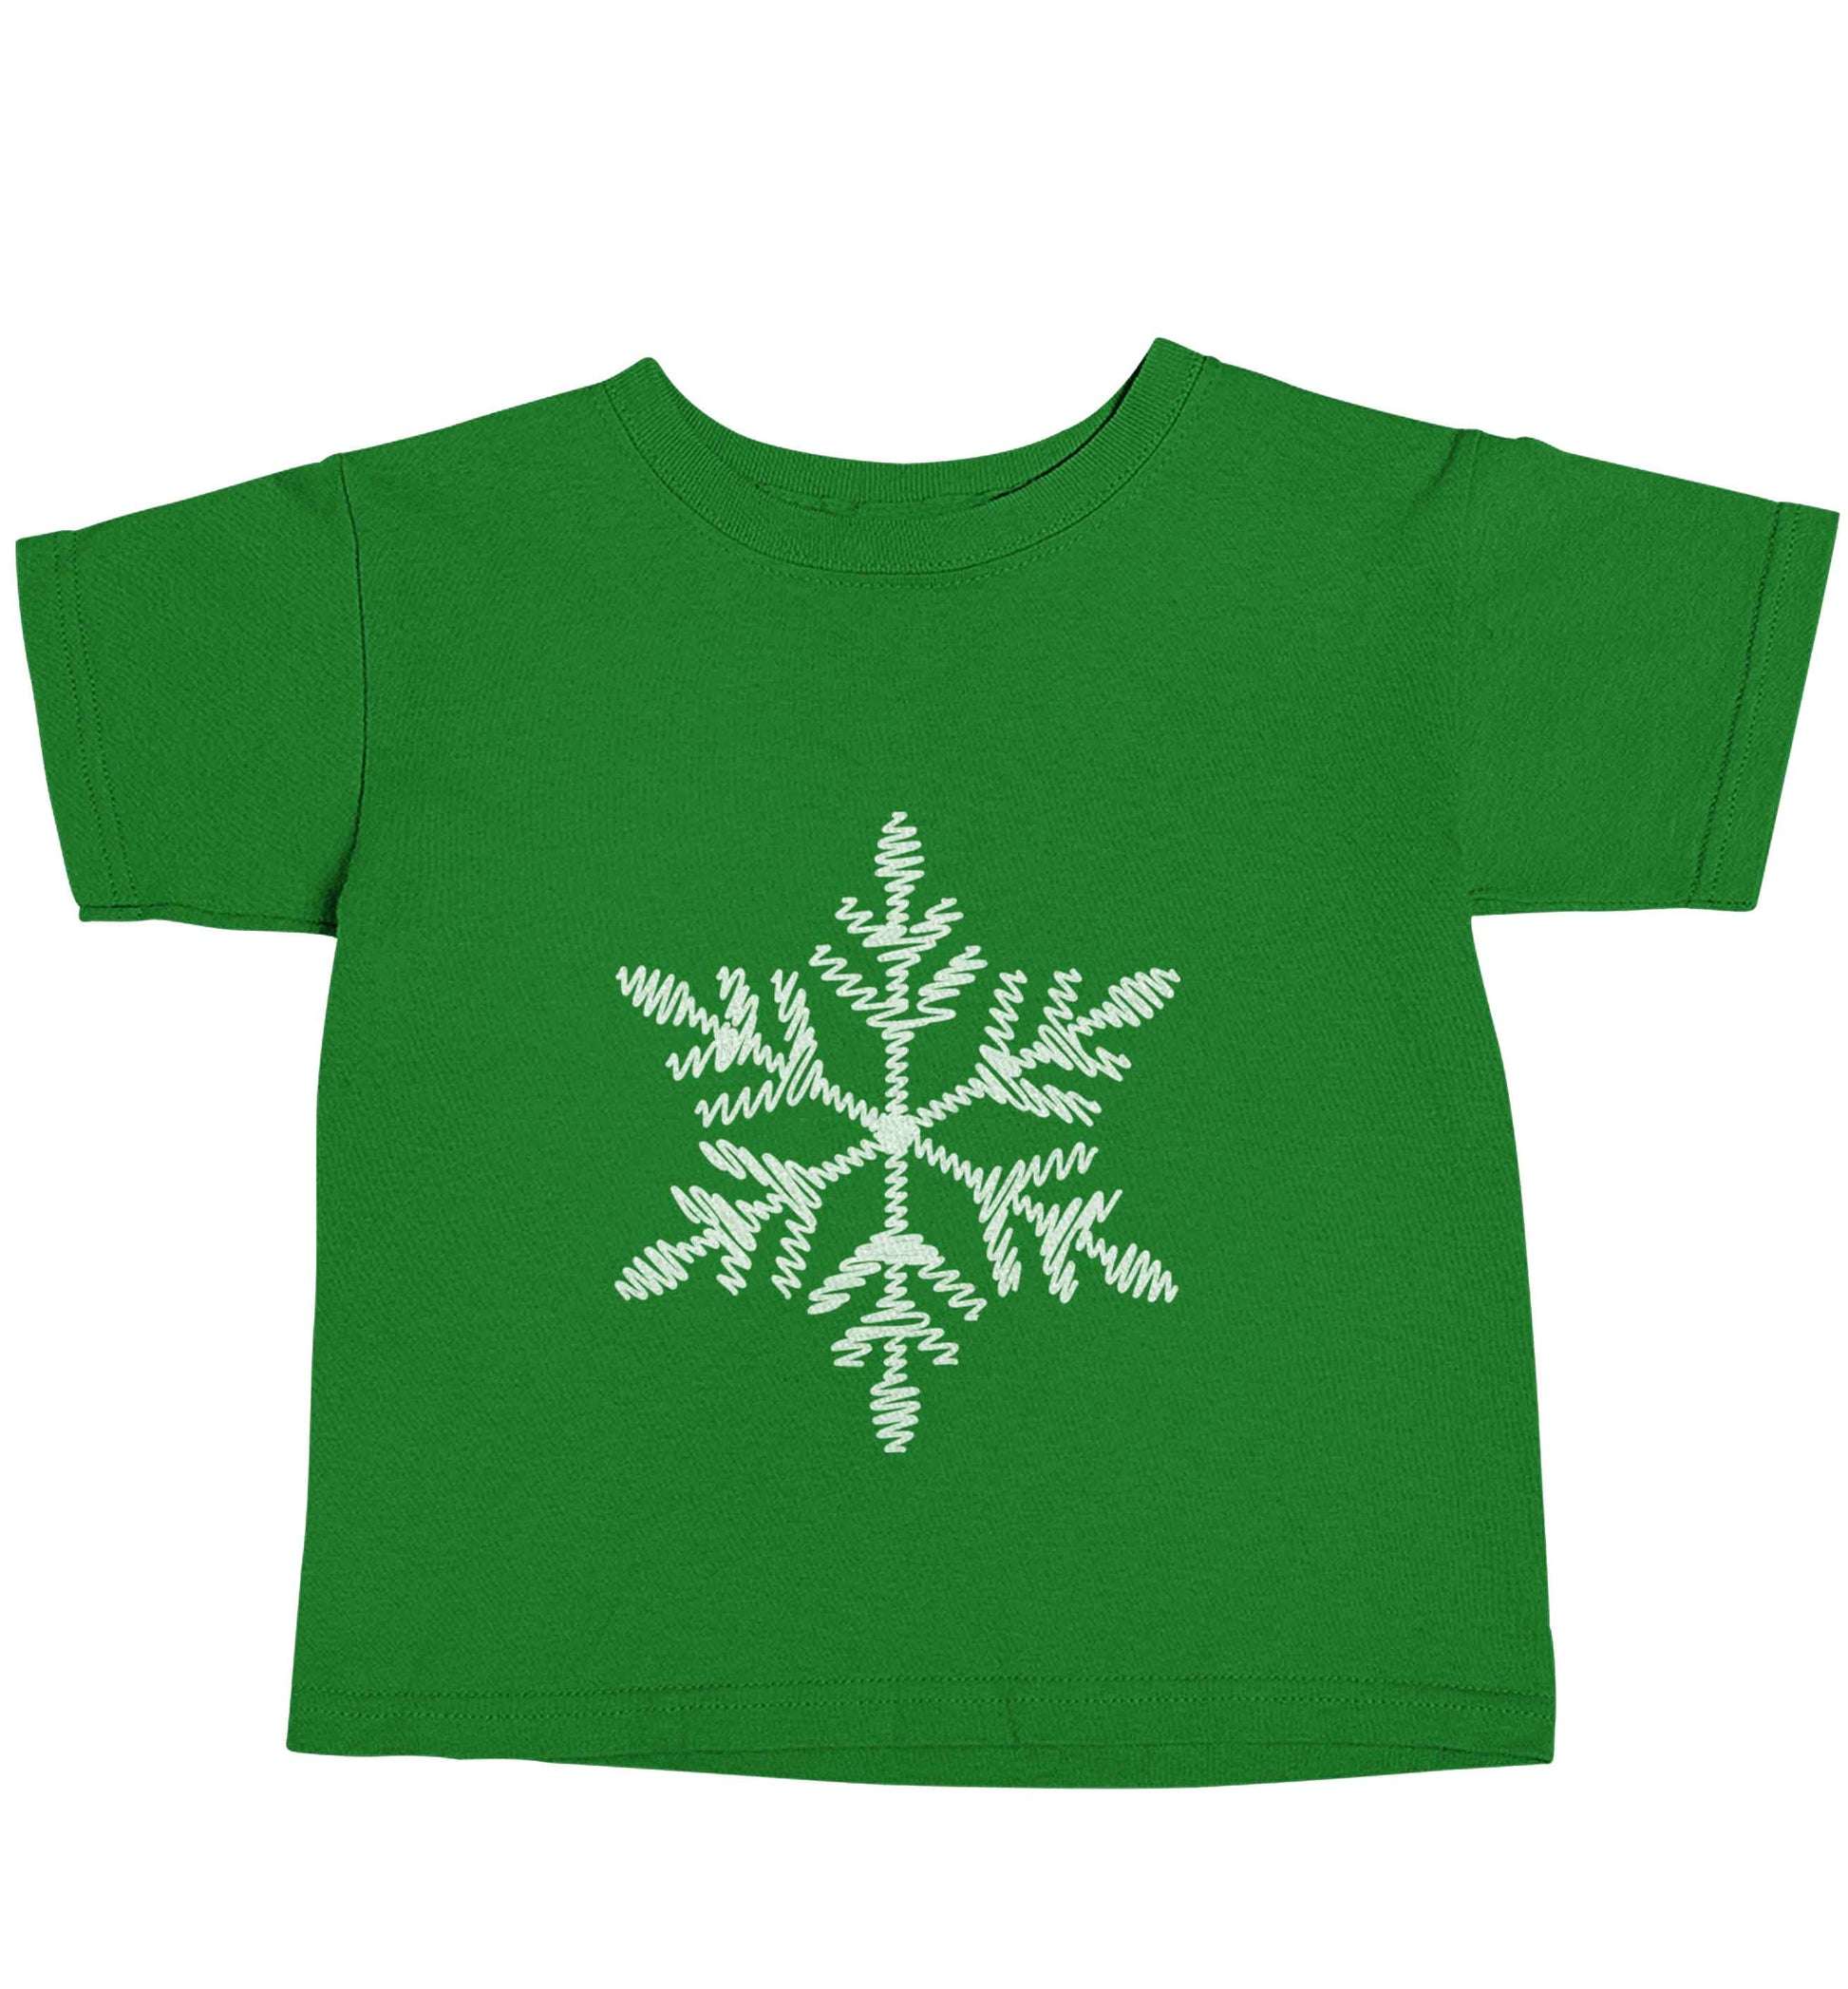 Snowflake green baby toddler Tshirt 2 Years